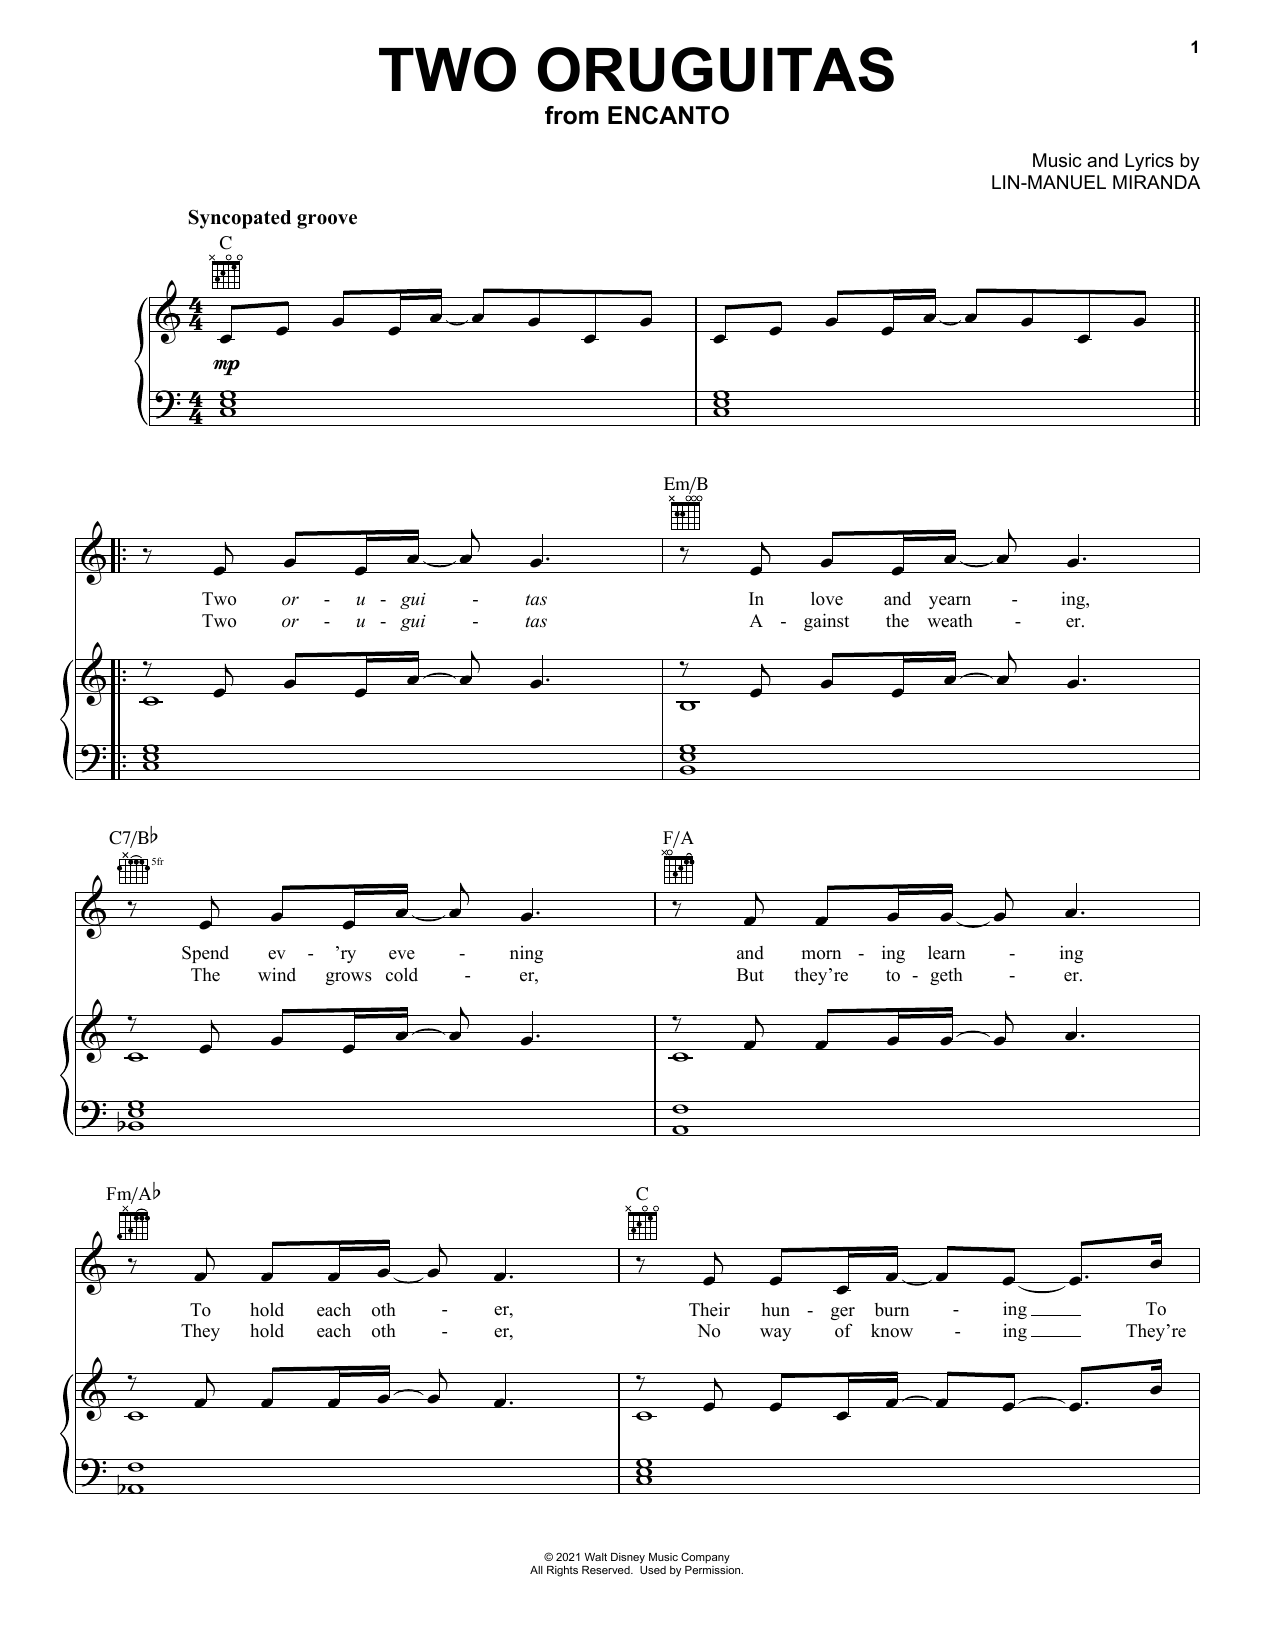 Lin-Manuel Miranda Two Oruguitas (from Encanto) Sheet Music Notes & Chords for Ukulele - Download or Print PDF